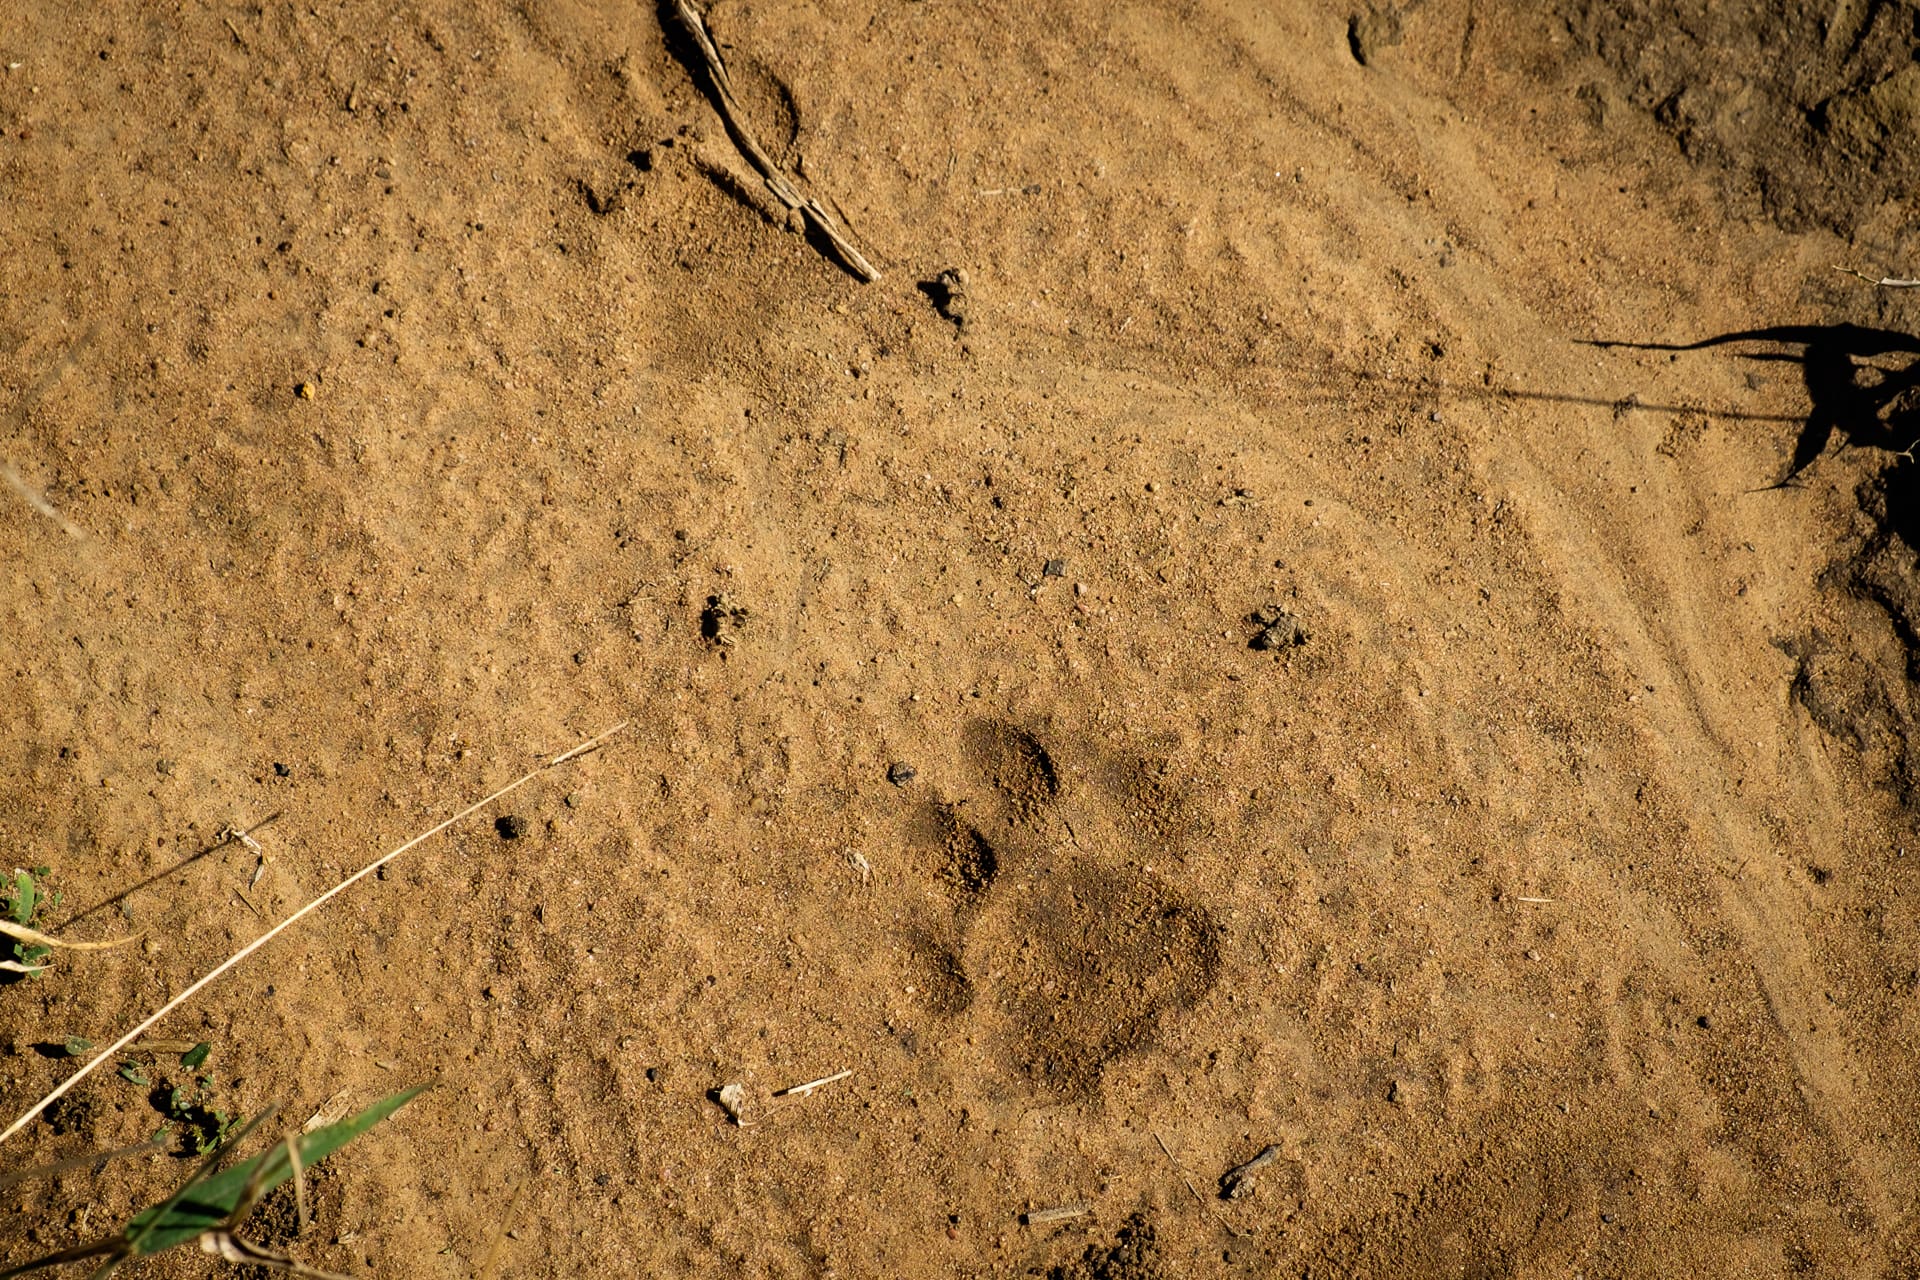 Identifying Big Cat Tracks in Africa